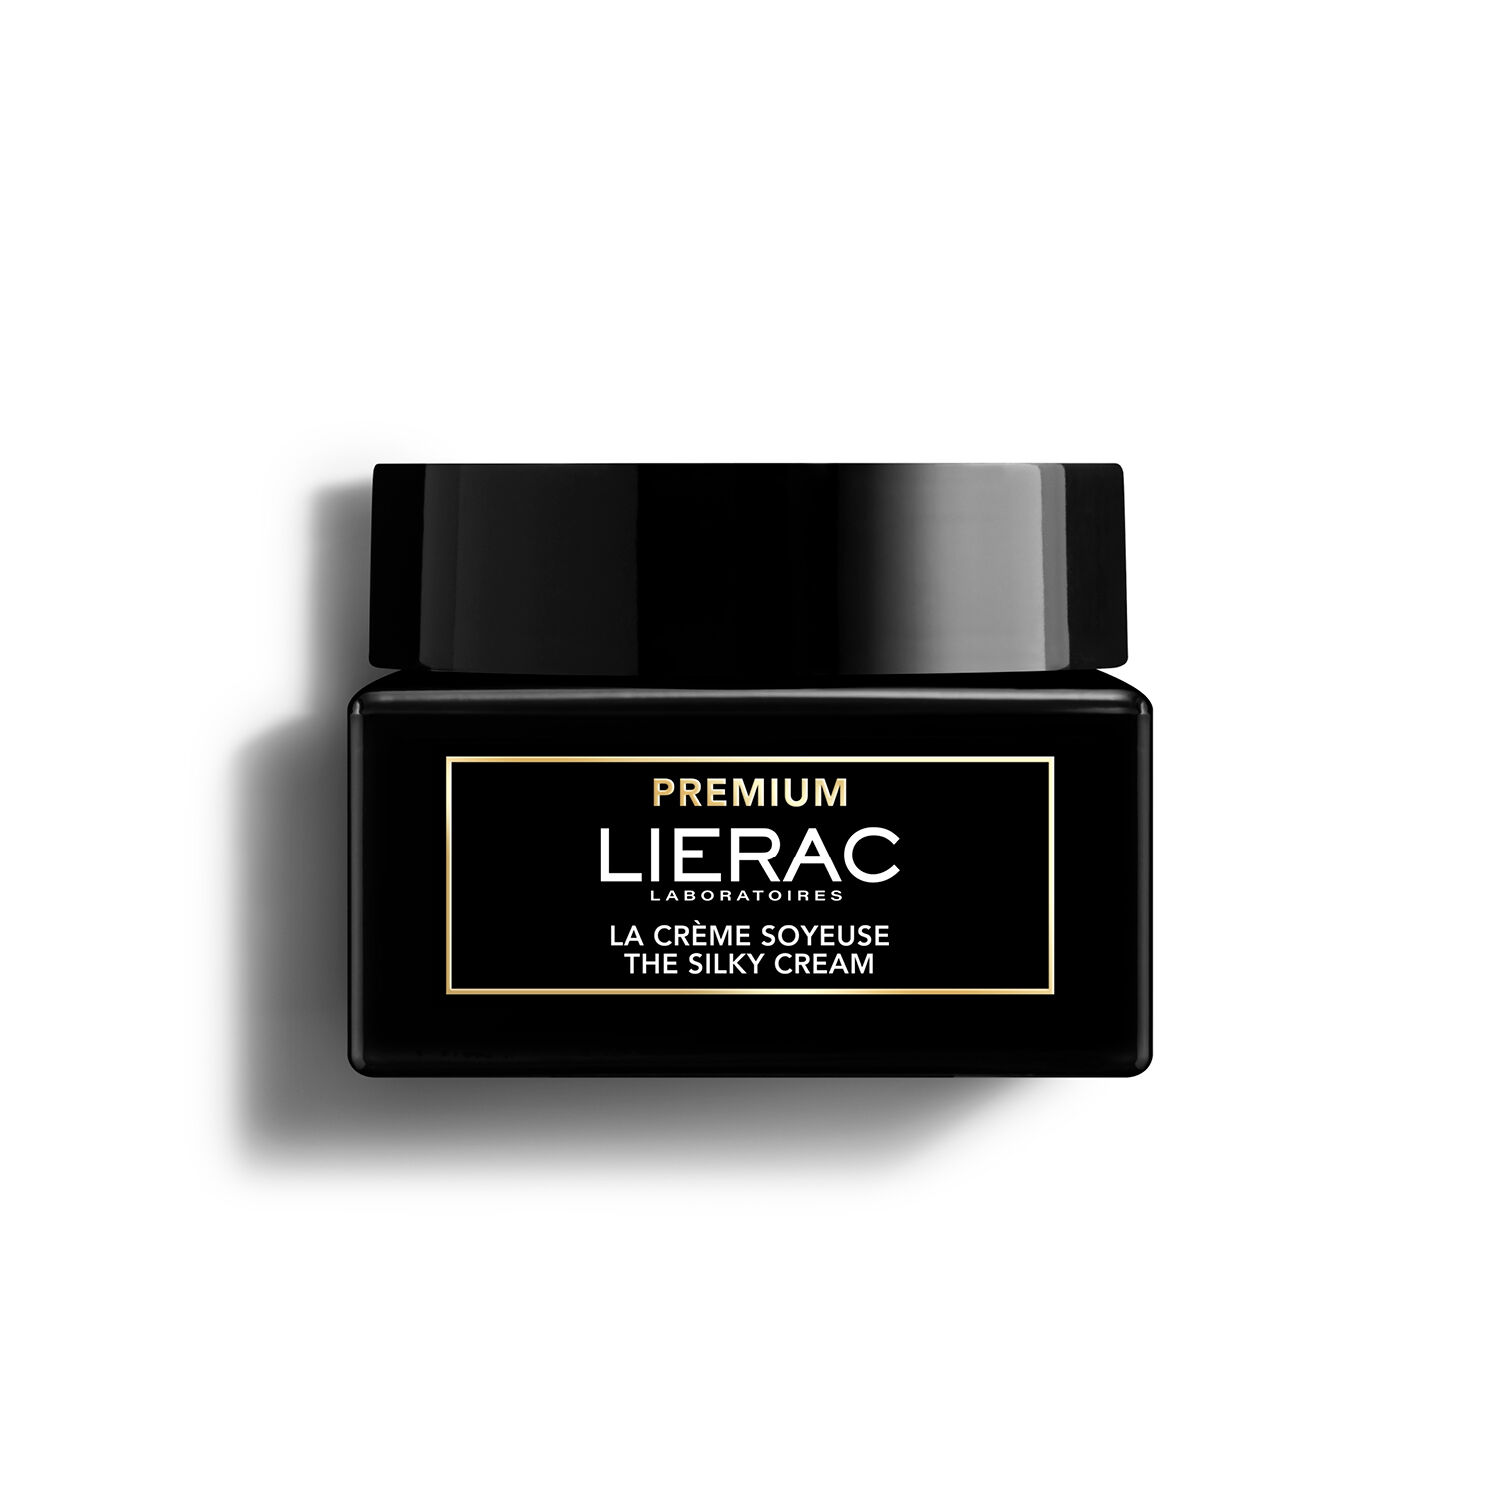 Шелковистый крем для лица Lierac Premium, 50 мл lierac насыщенный крем для лица 50 мл lierac premium